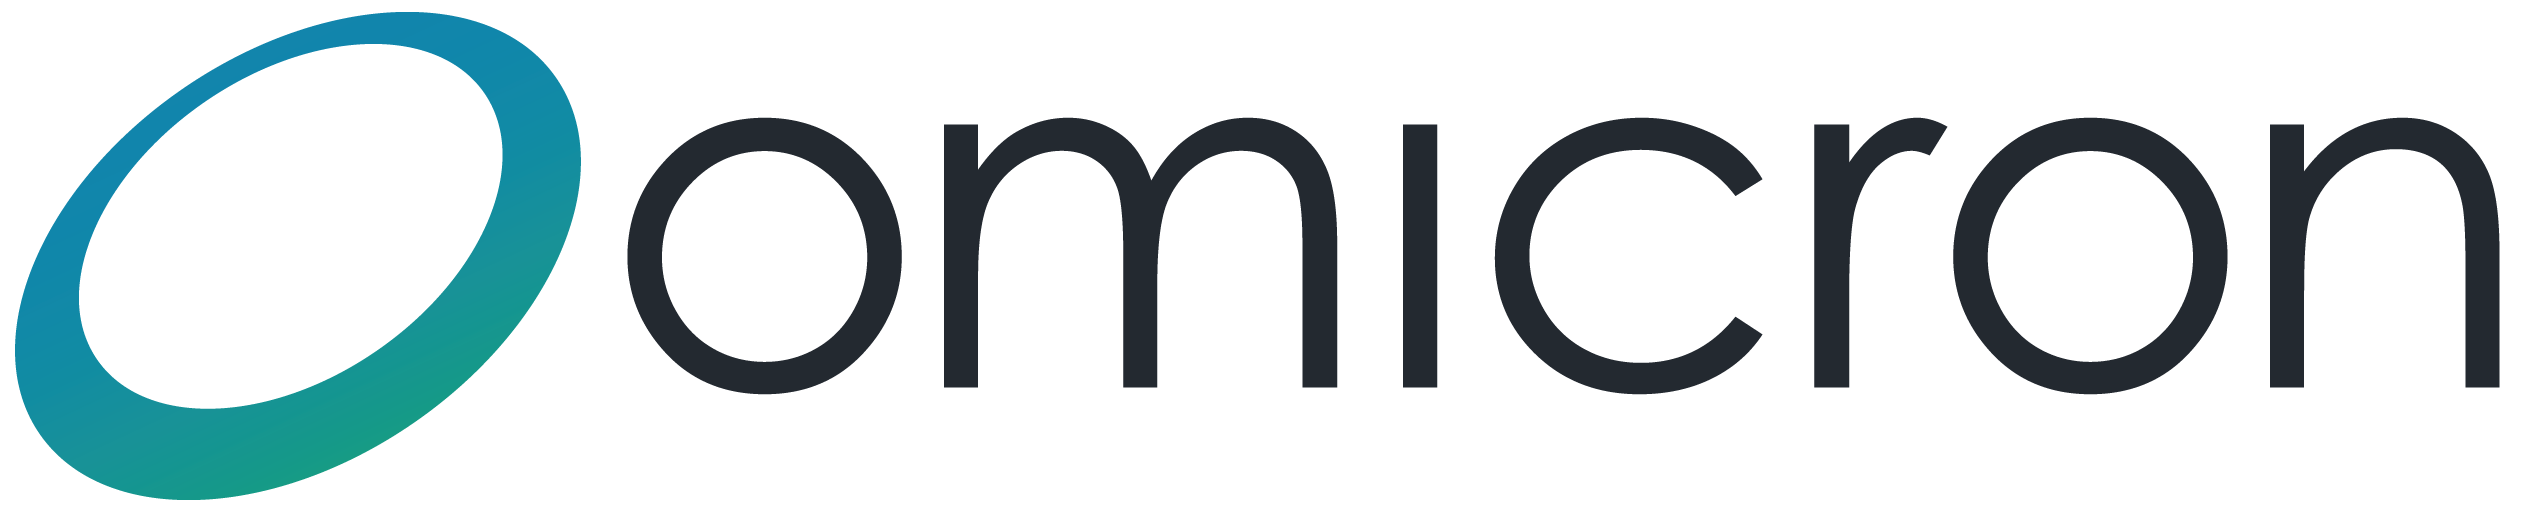 Omicron-logo-horizontal